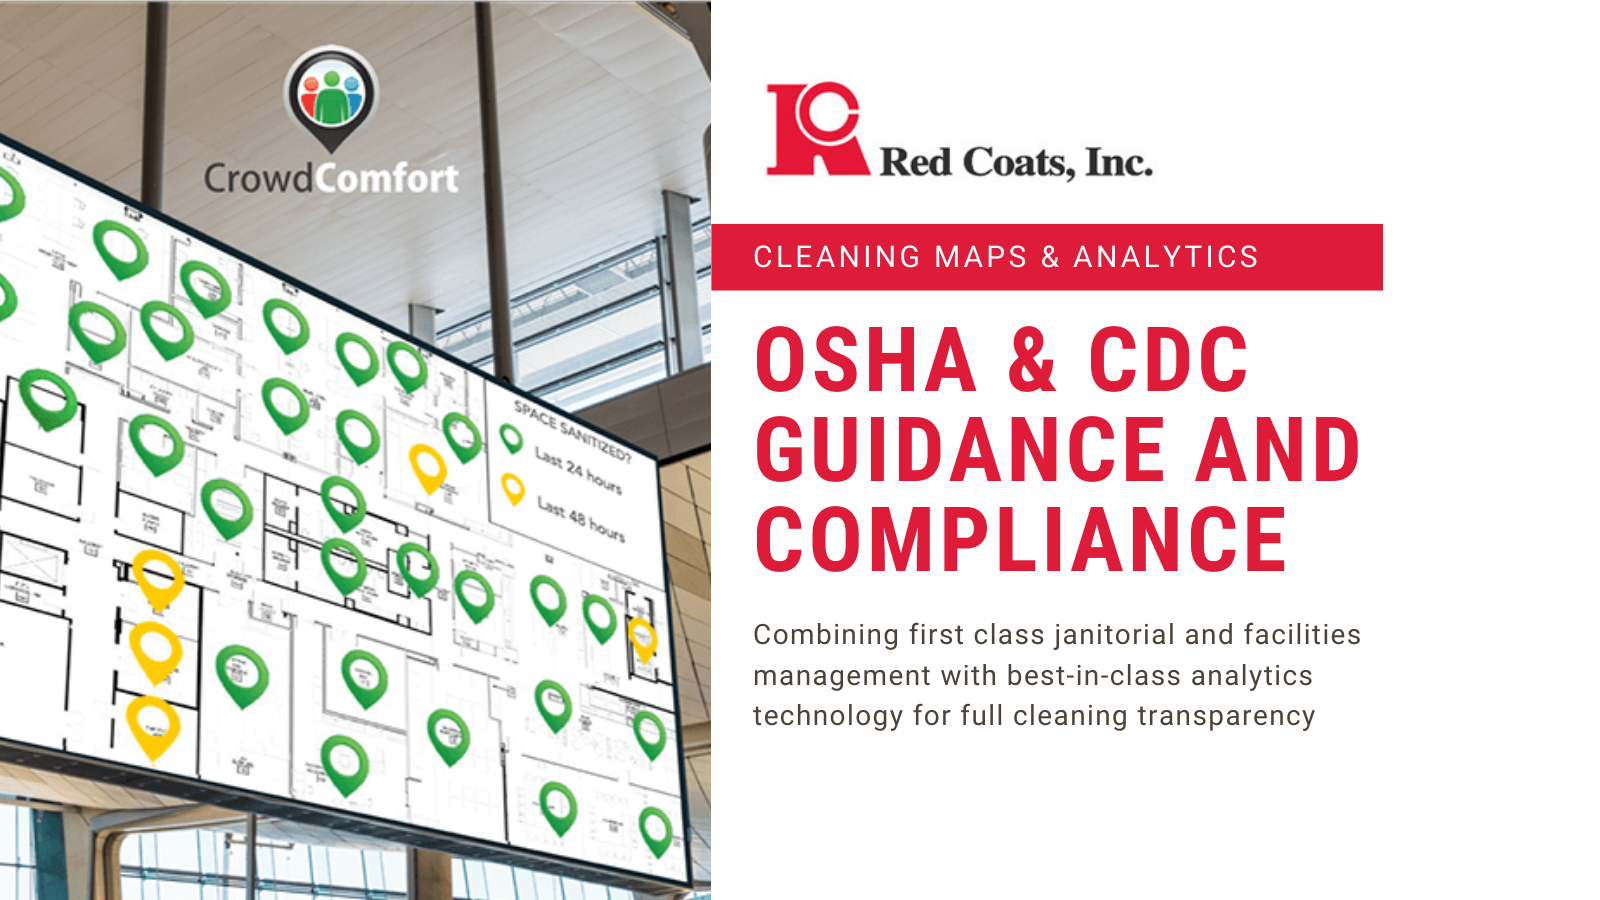 Red Coats OSHA & CDC Compliance